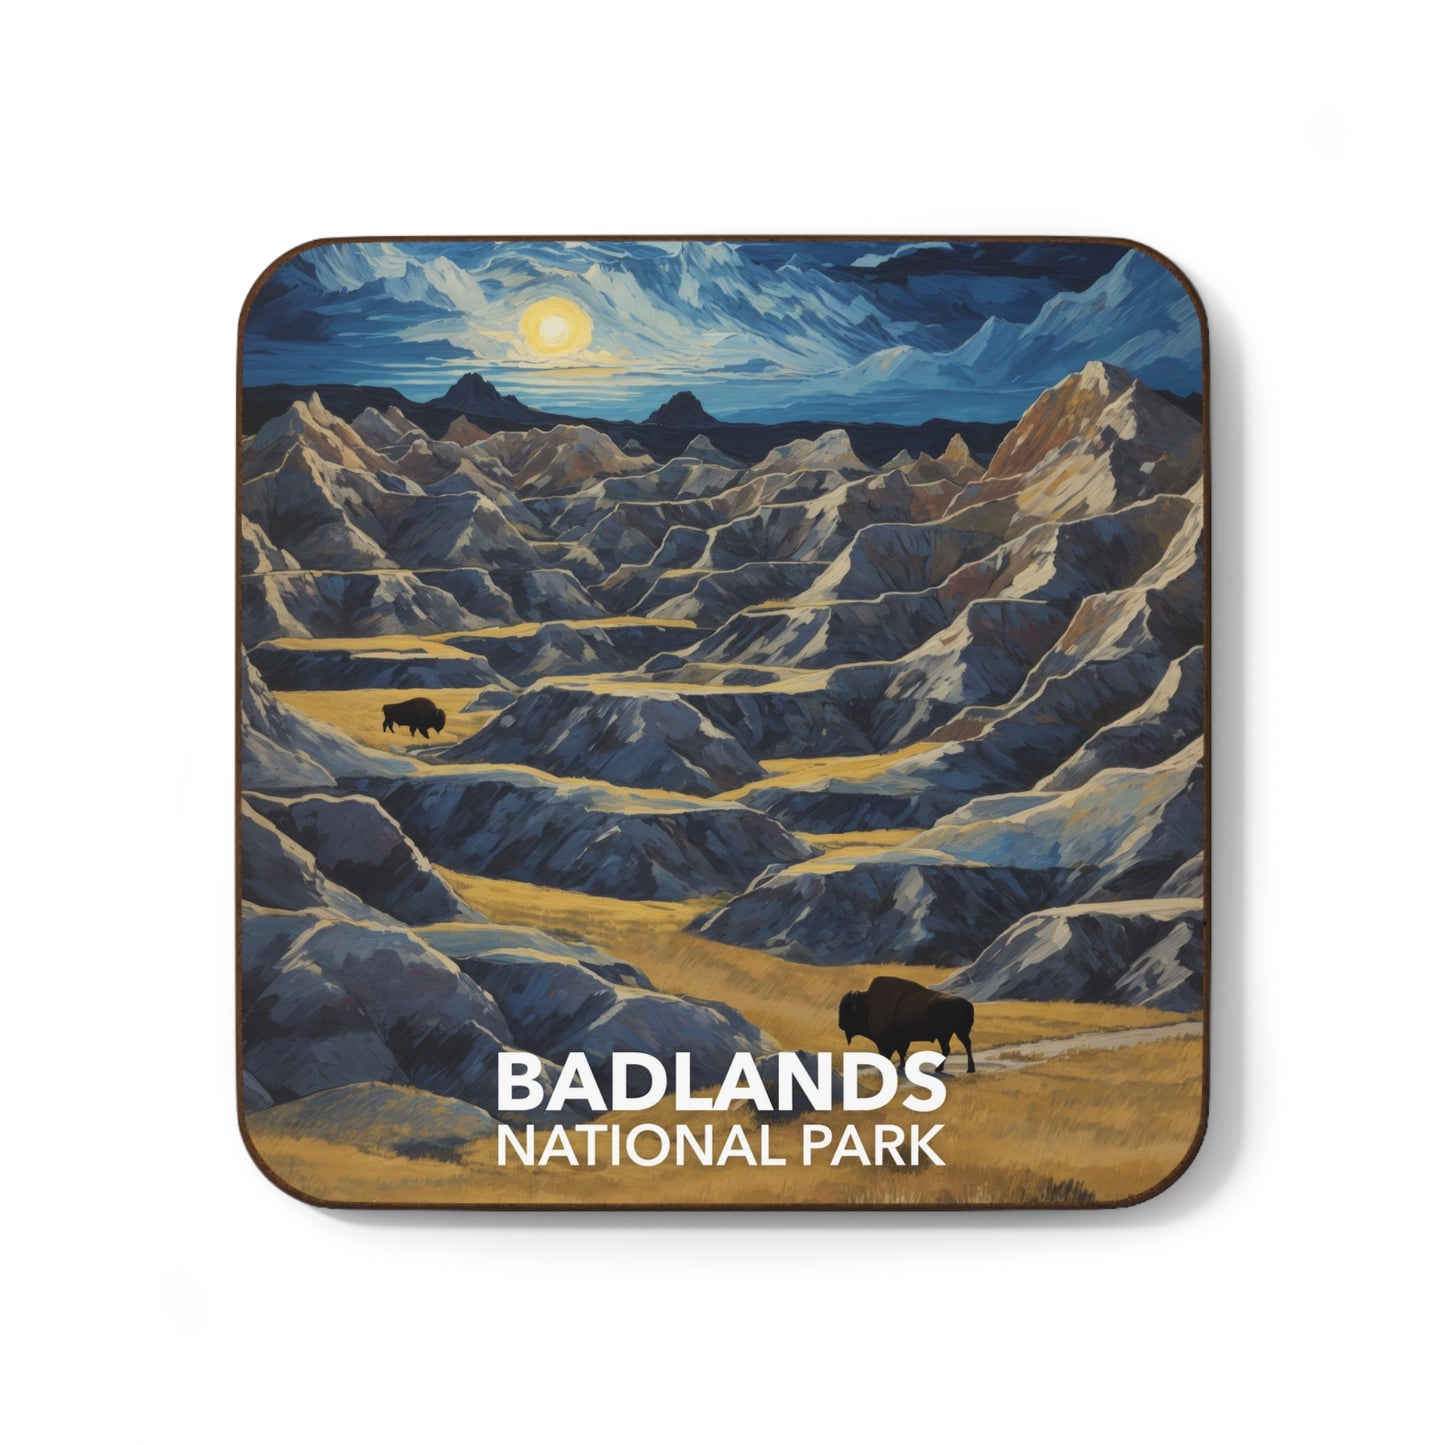 Badlands National Park Coaster - The Starry Night